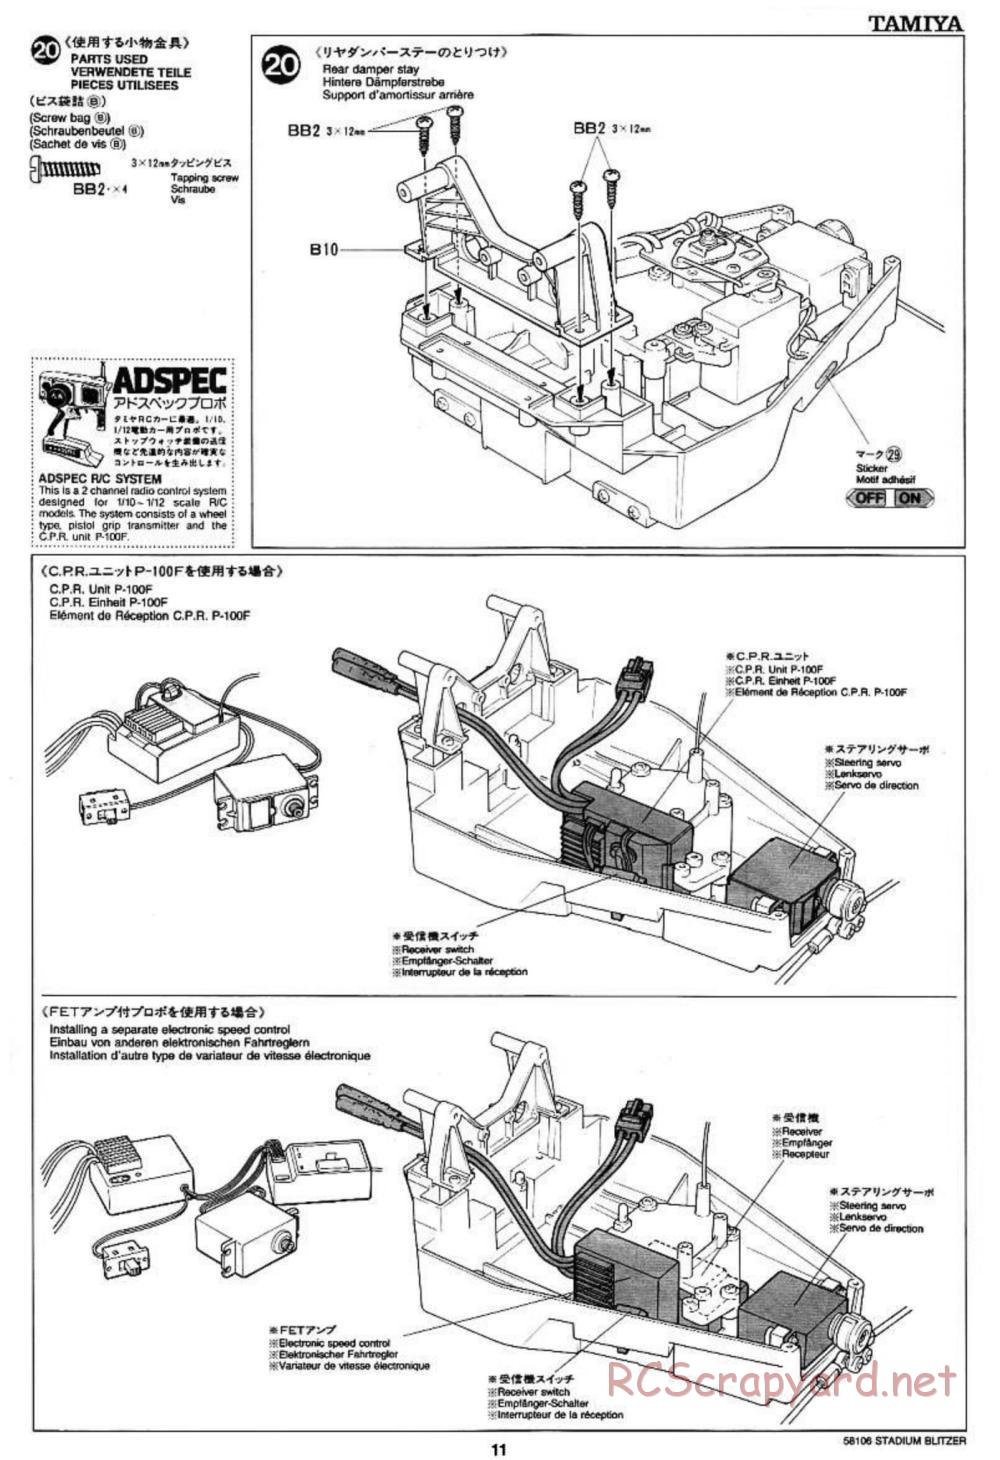 Tamiya - Stadium Blitzer Chassis - Manual - Page 11